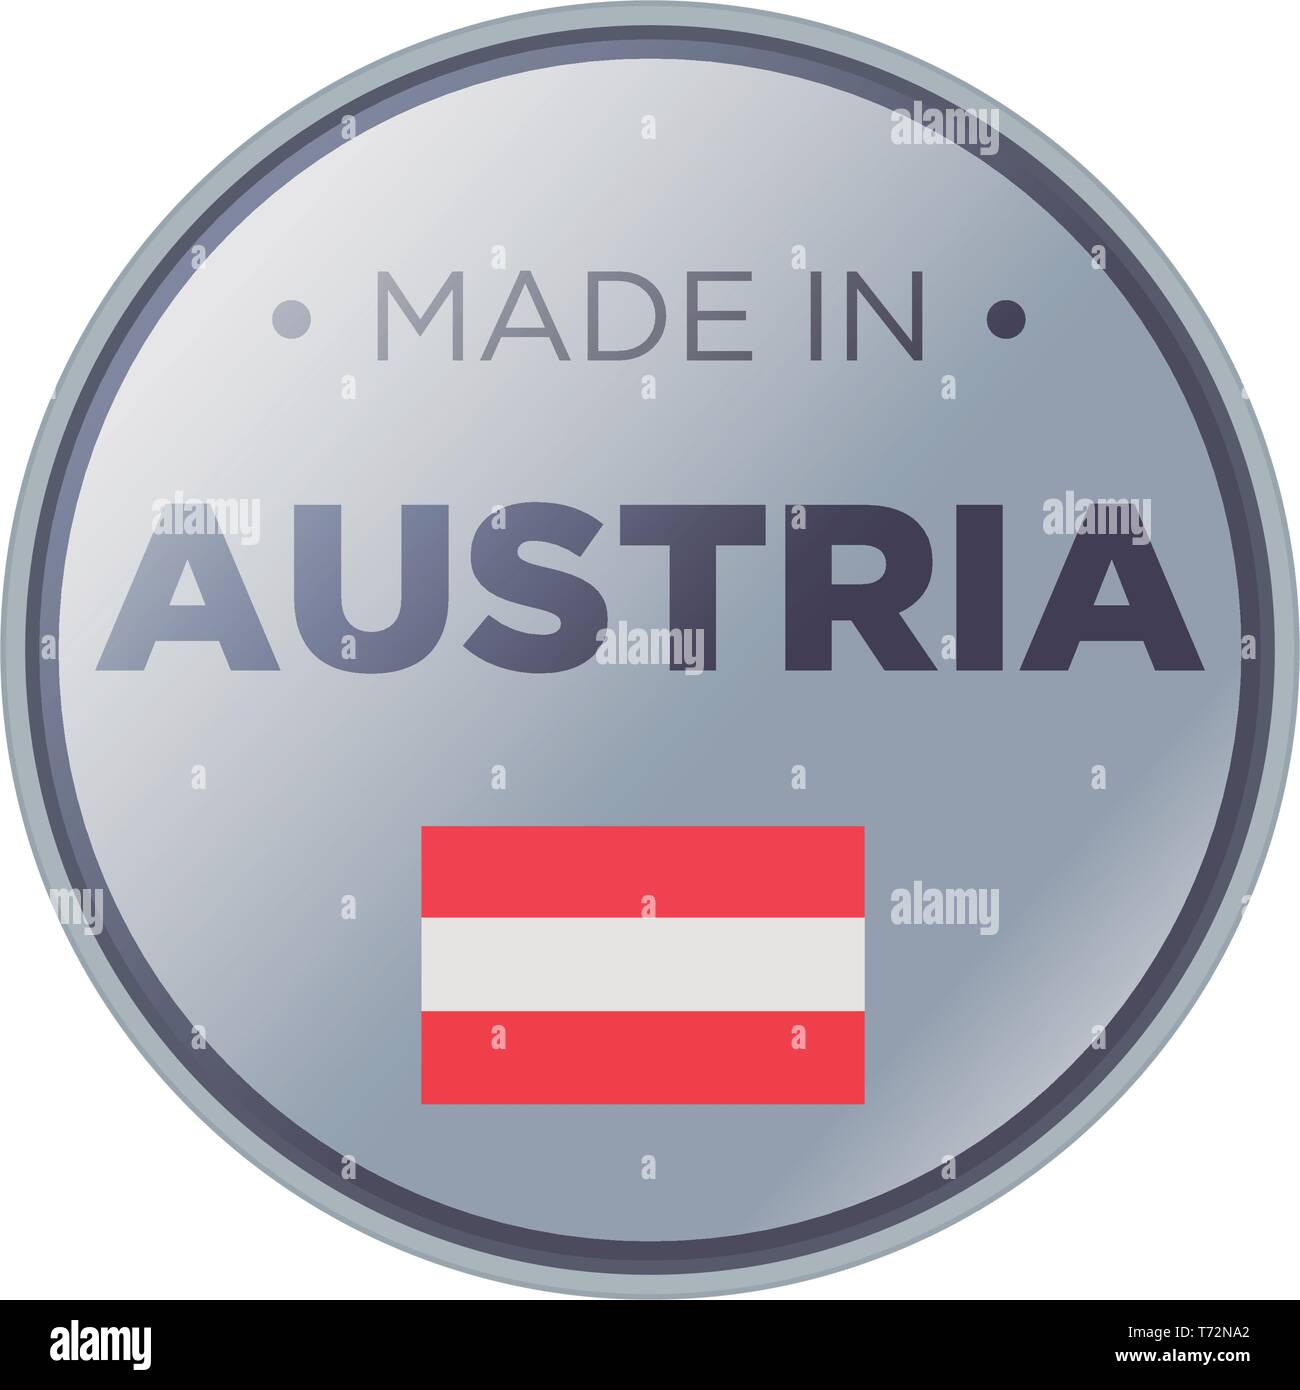 MADE IN AUSTRIA Stock Vector